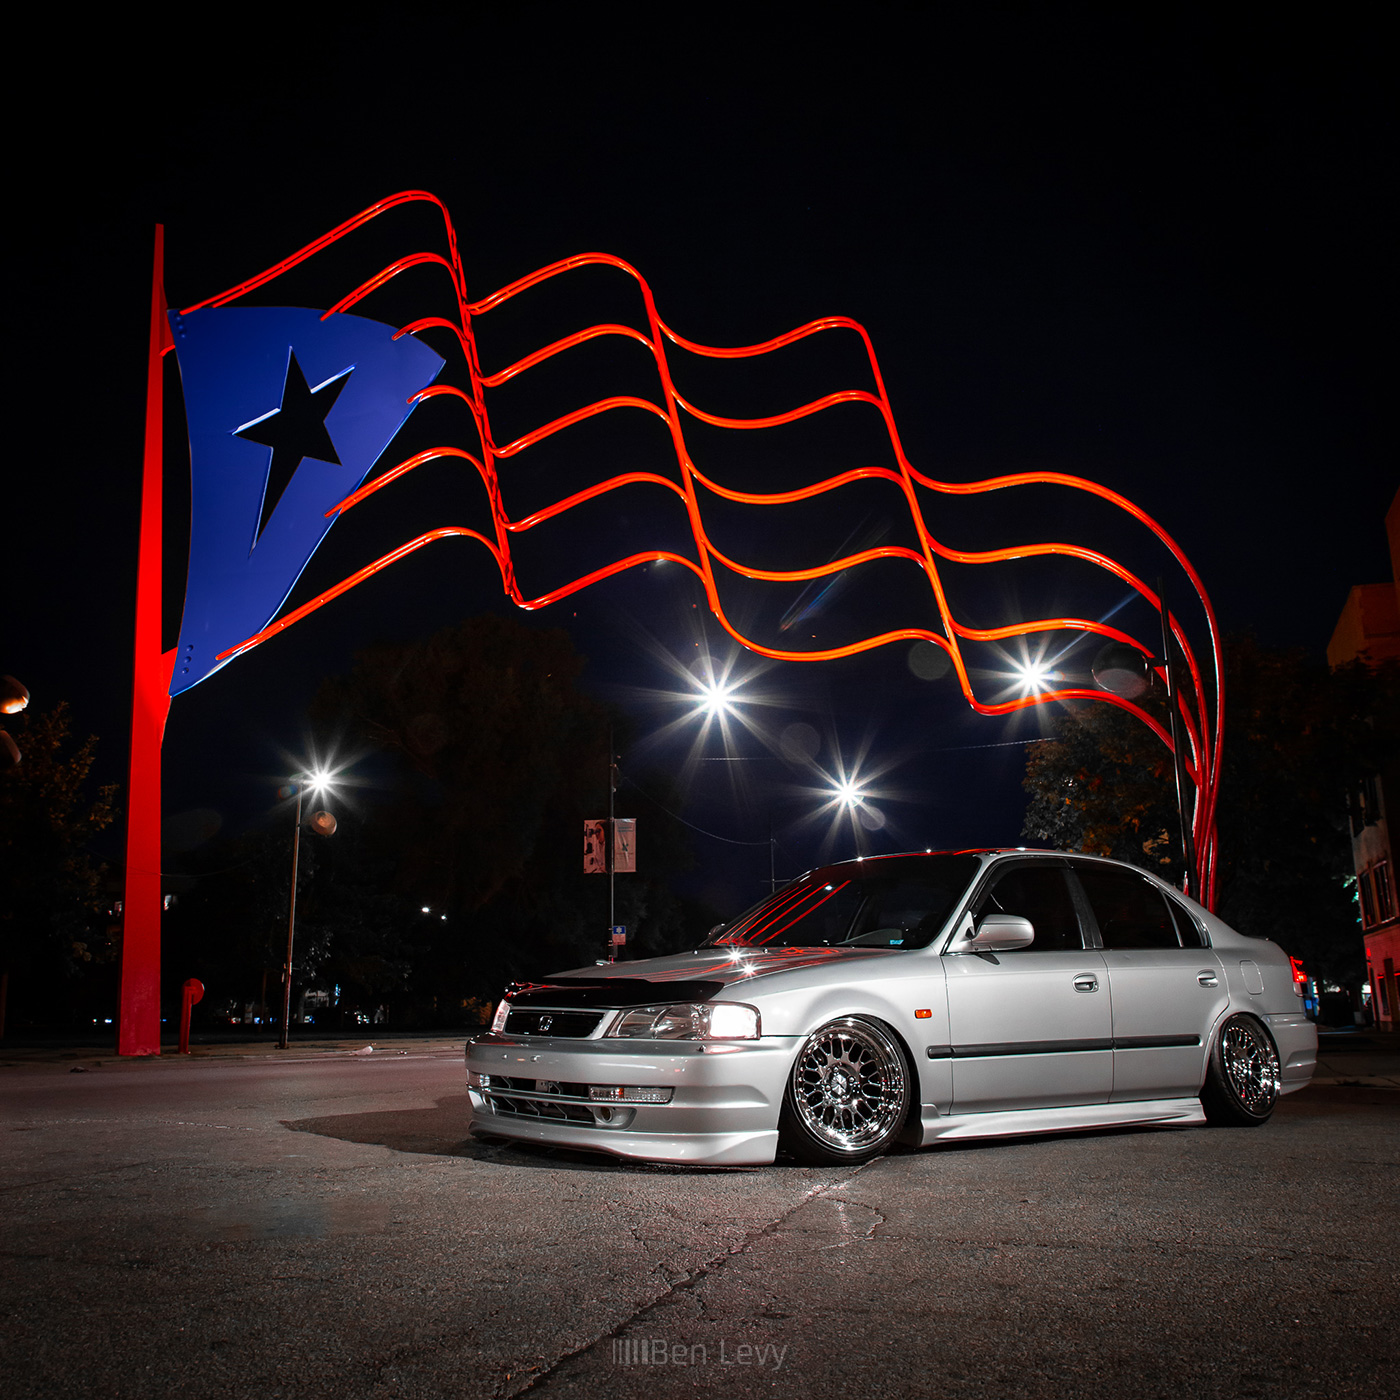 Silver Honda Civic at Puerto Rican Flag Chicago Landmark